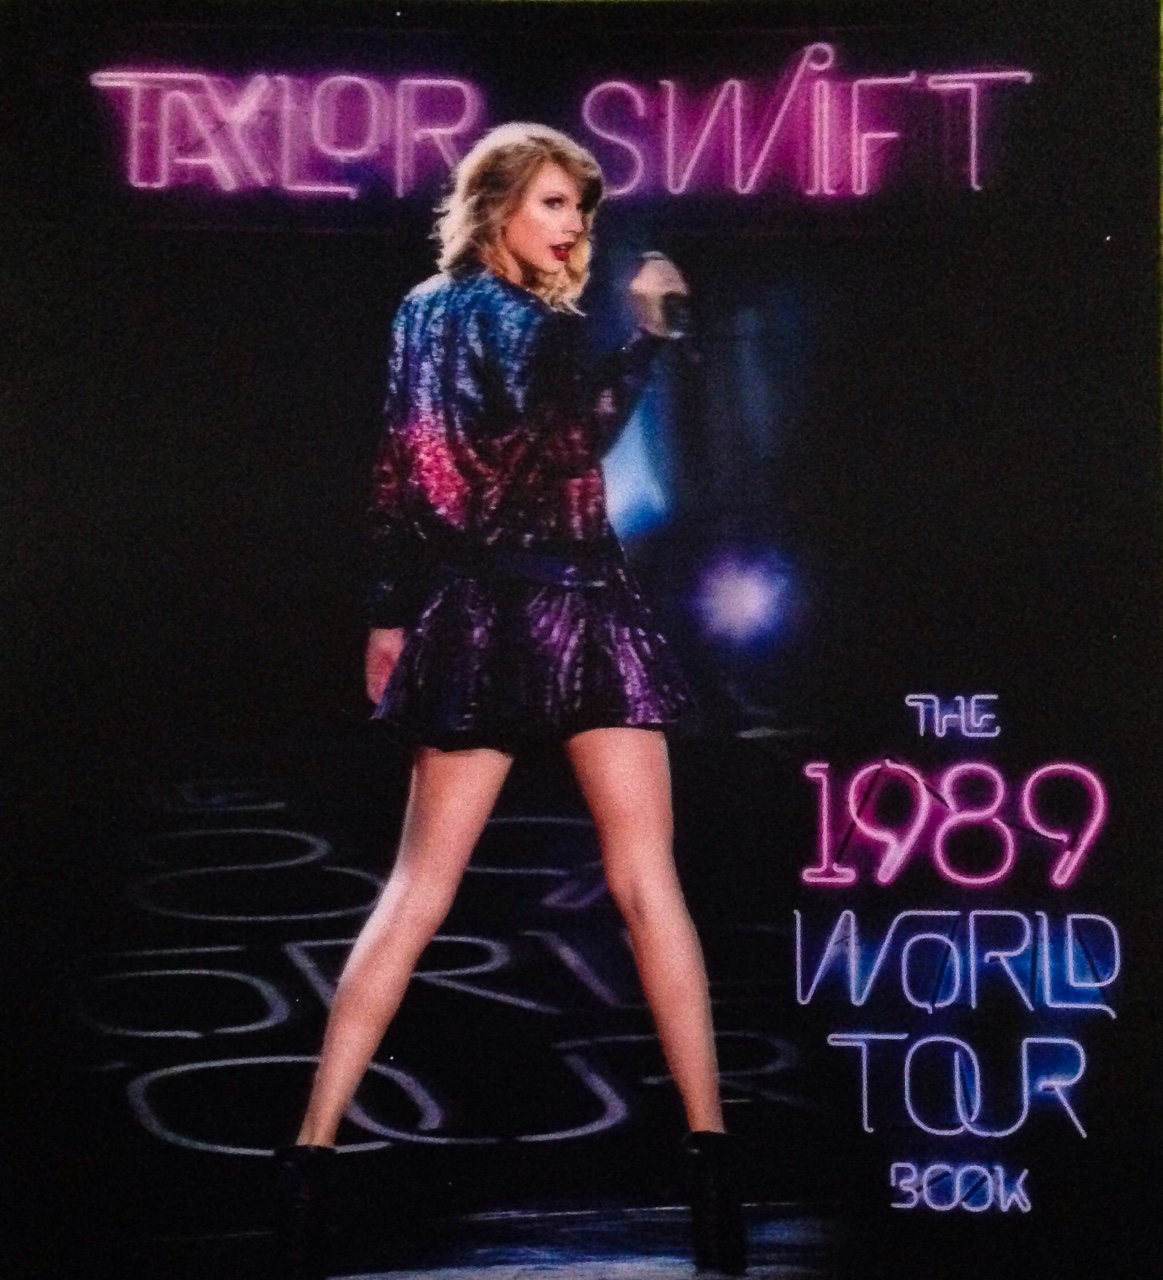 the 1989 world tour book